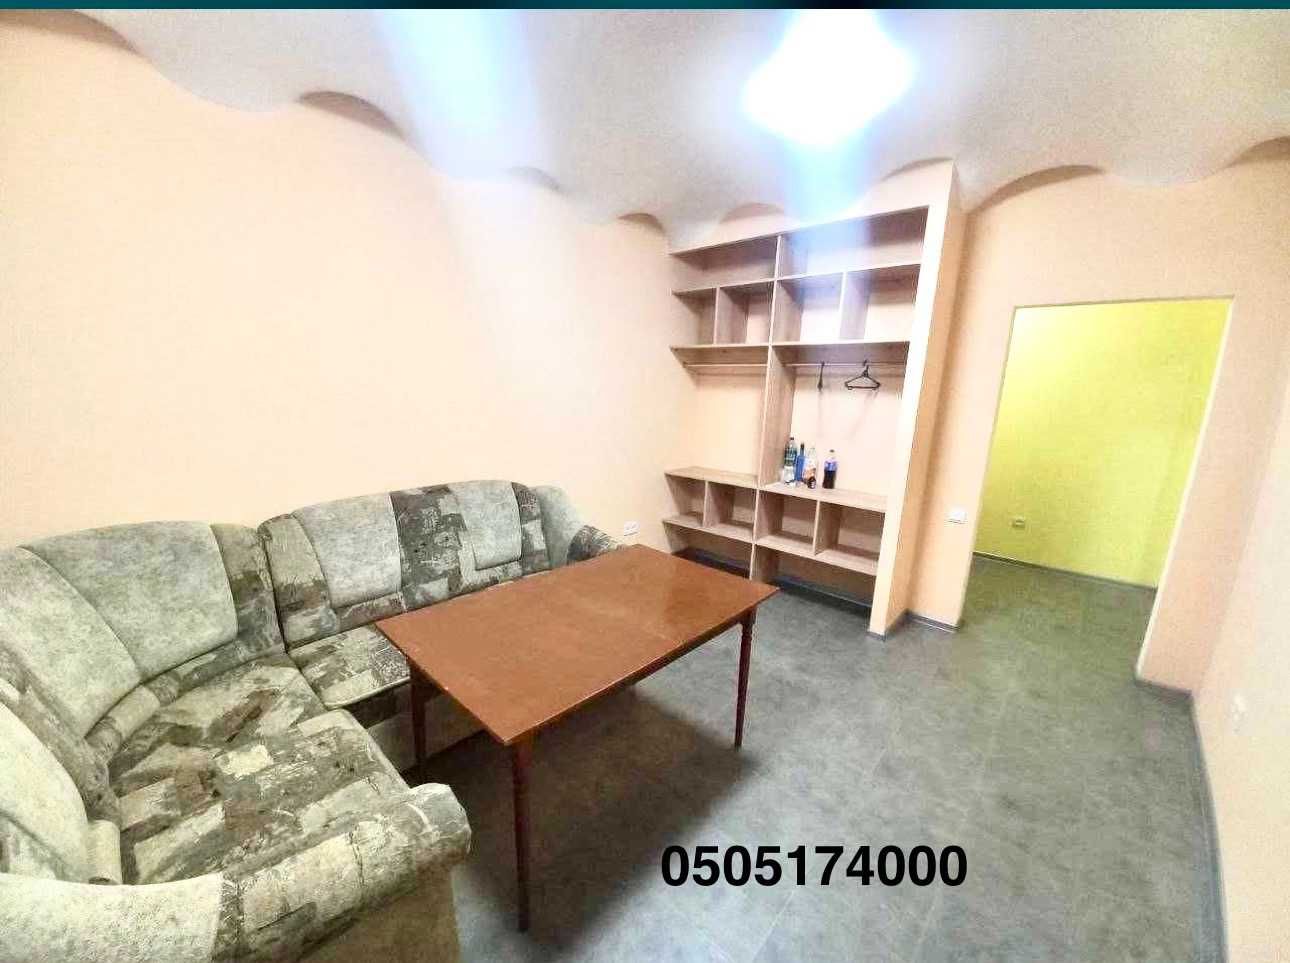 Аренда 2 комнатной квартиры в Приднепровске Днепр